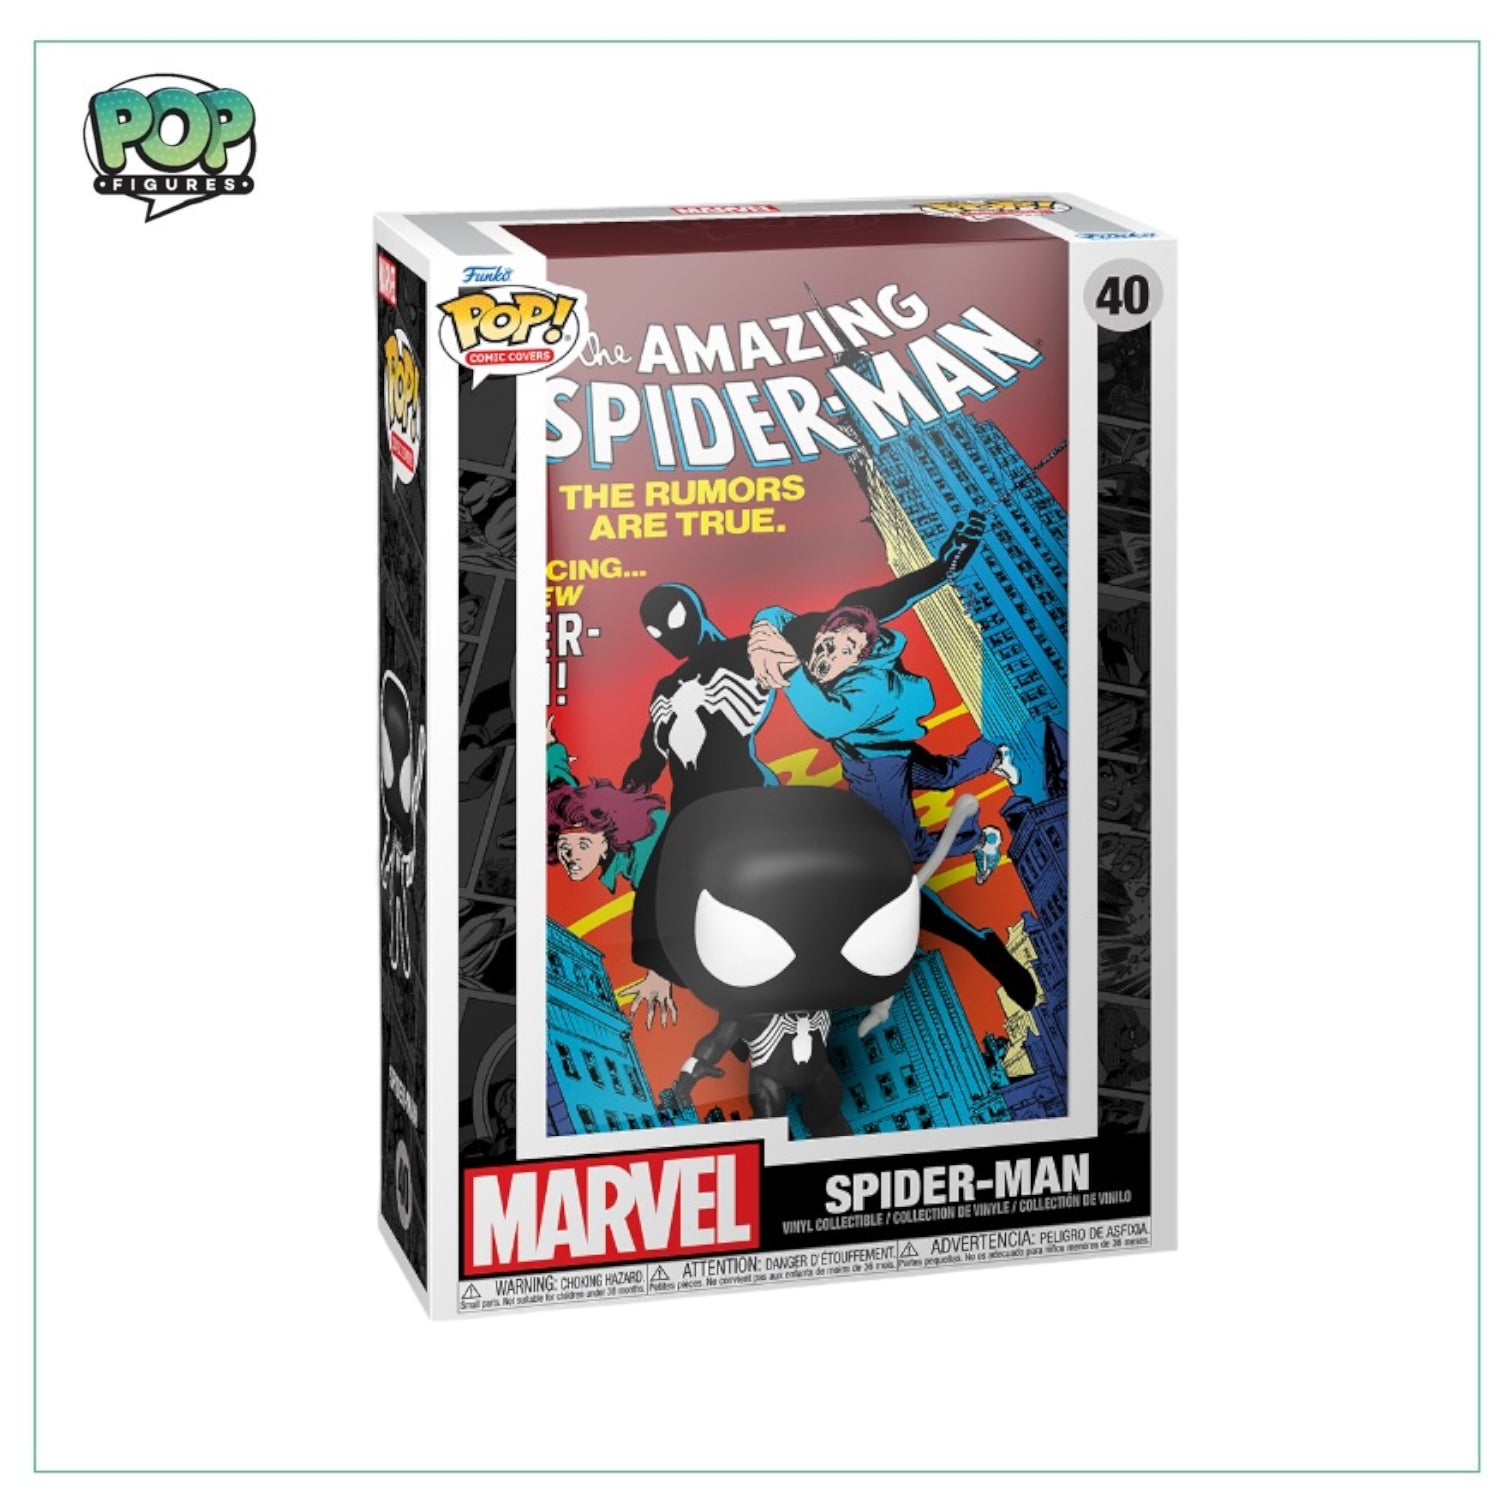 Spider-man #40 Funko Comic Cover Pop! - The Amazing Spider-Man